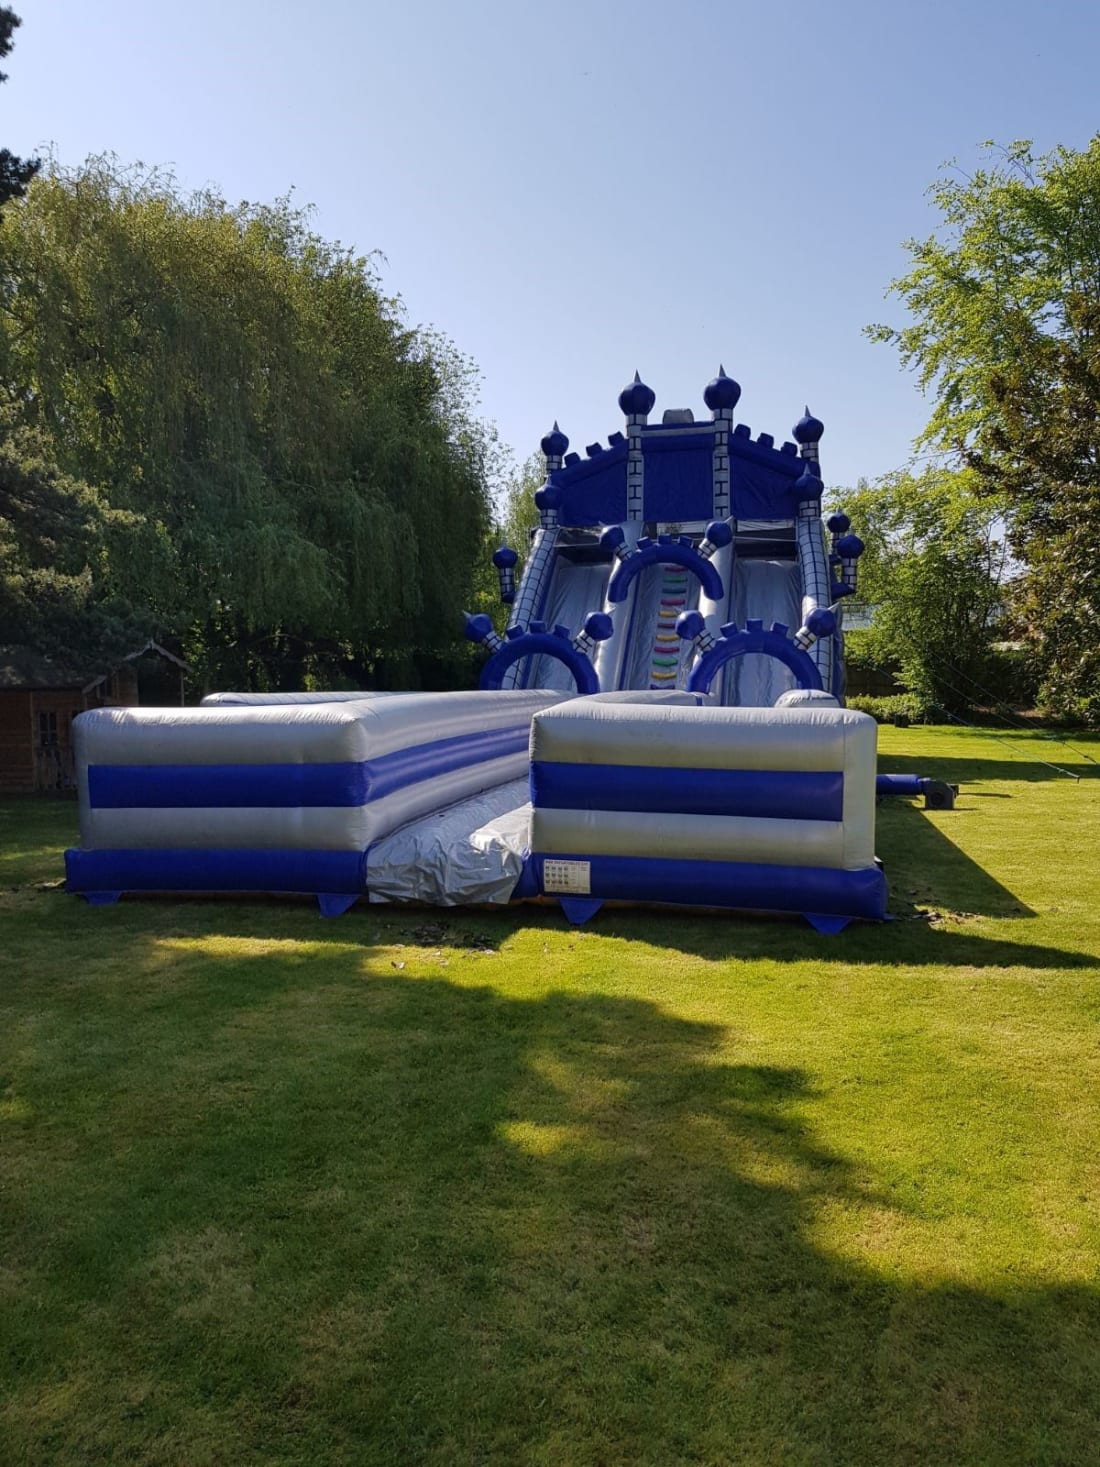 Giant Inflatable Super Slide